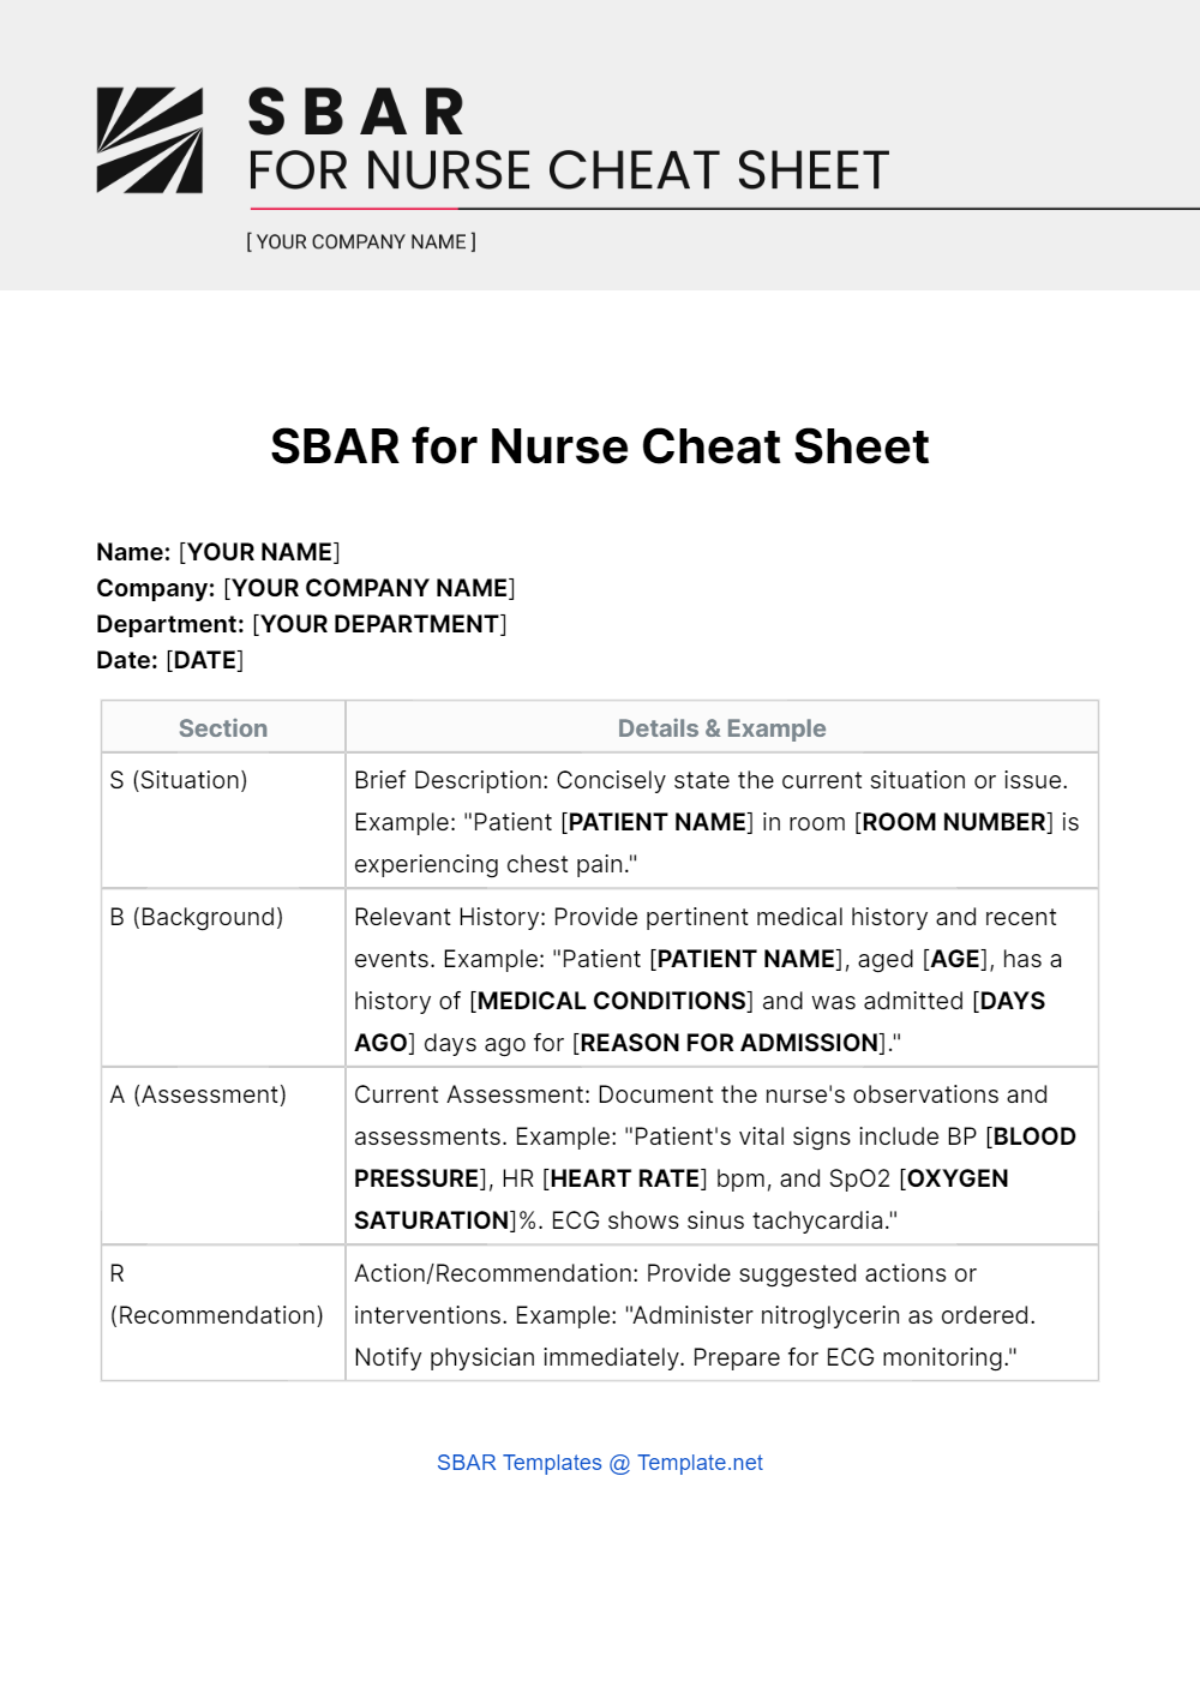 SBAR for Nurse Cheat Sheet Template